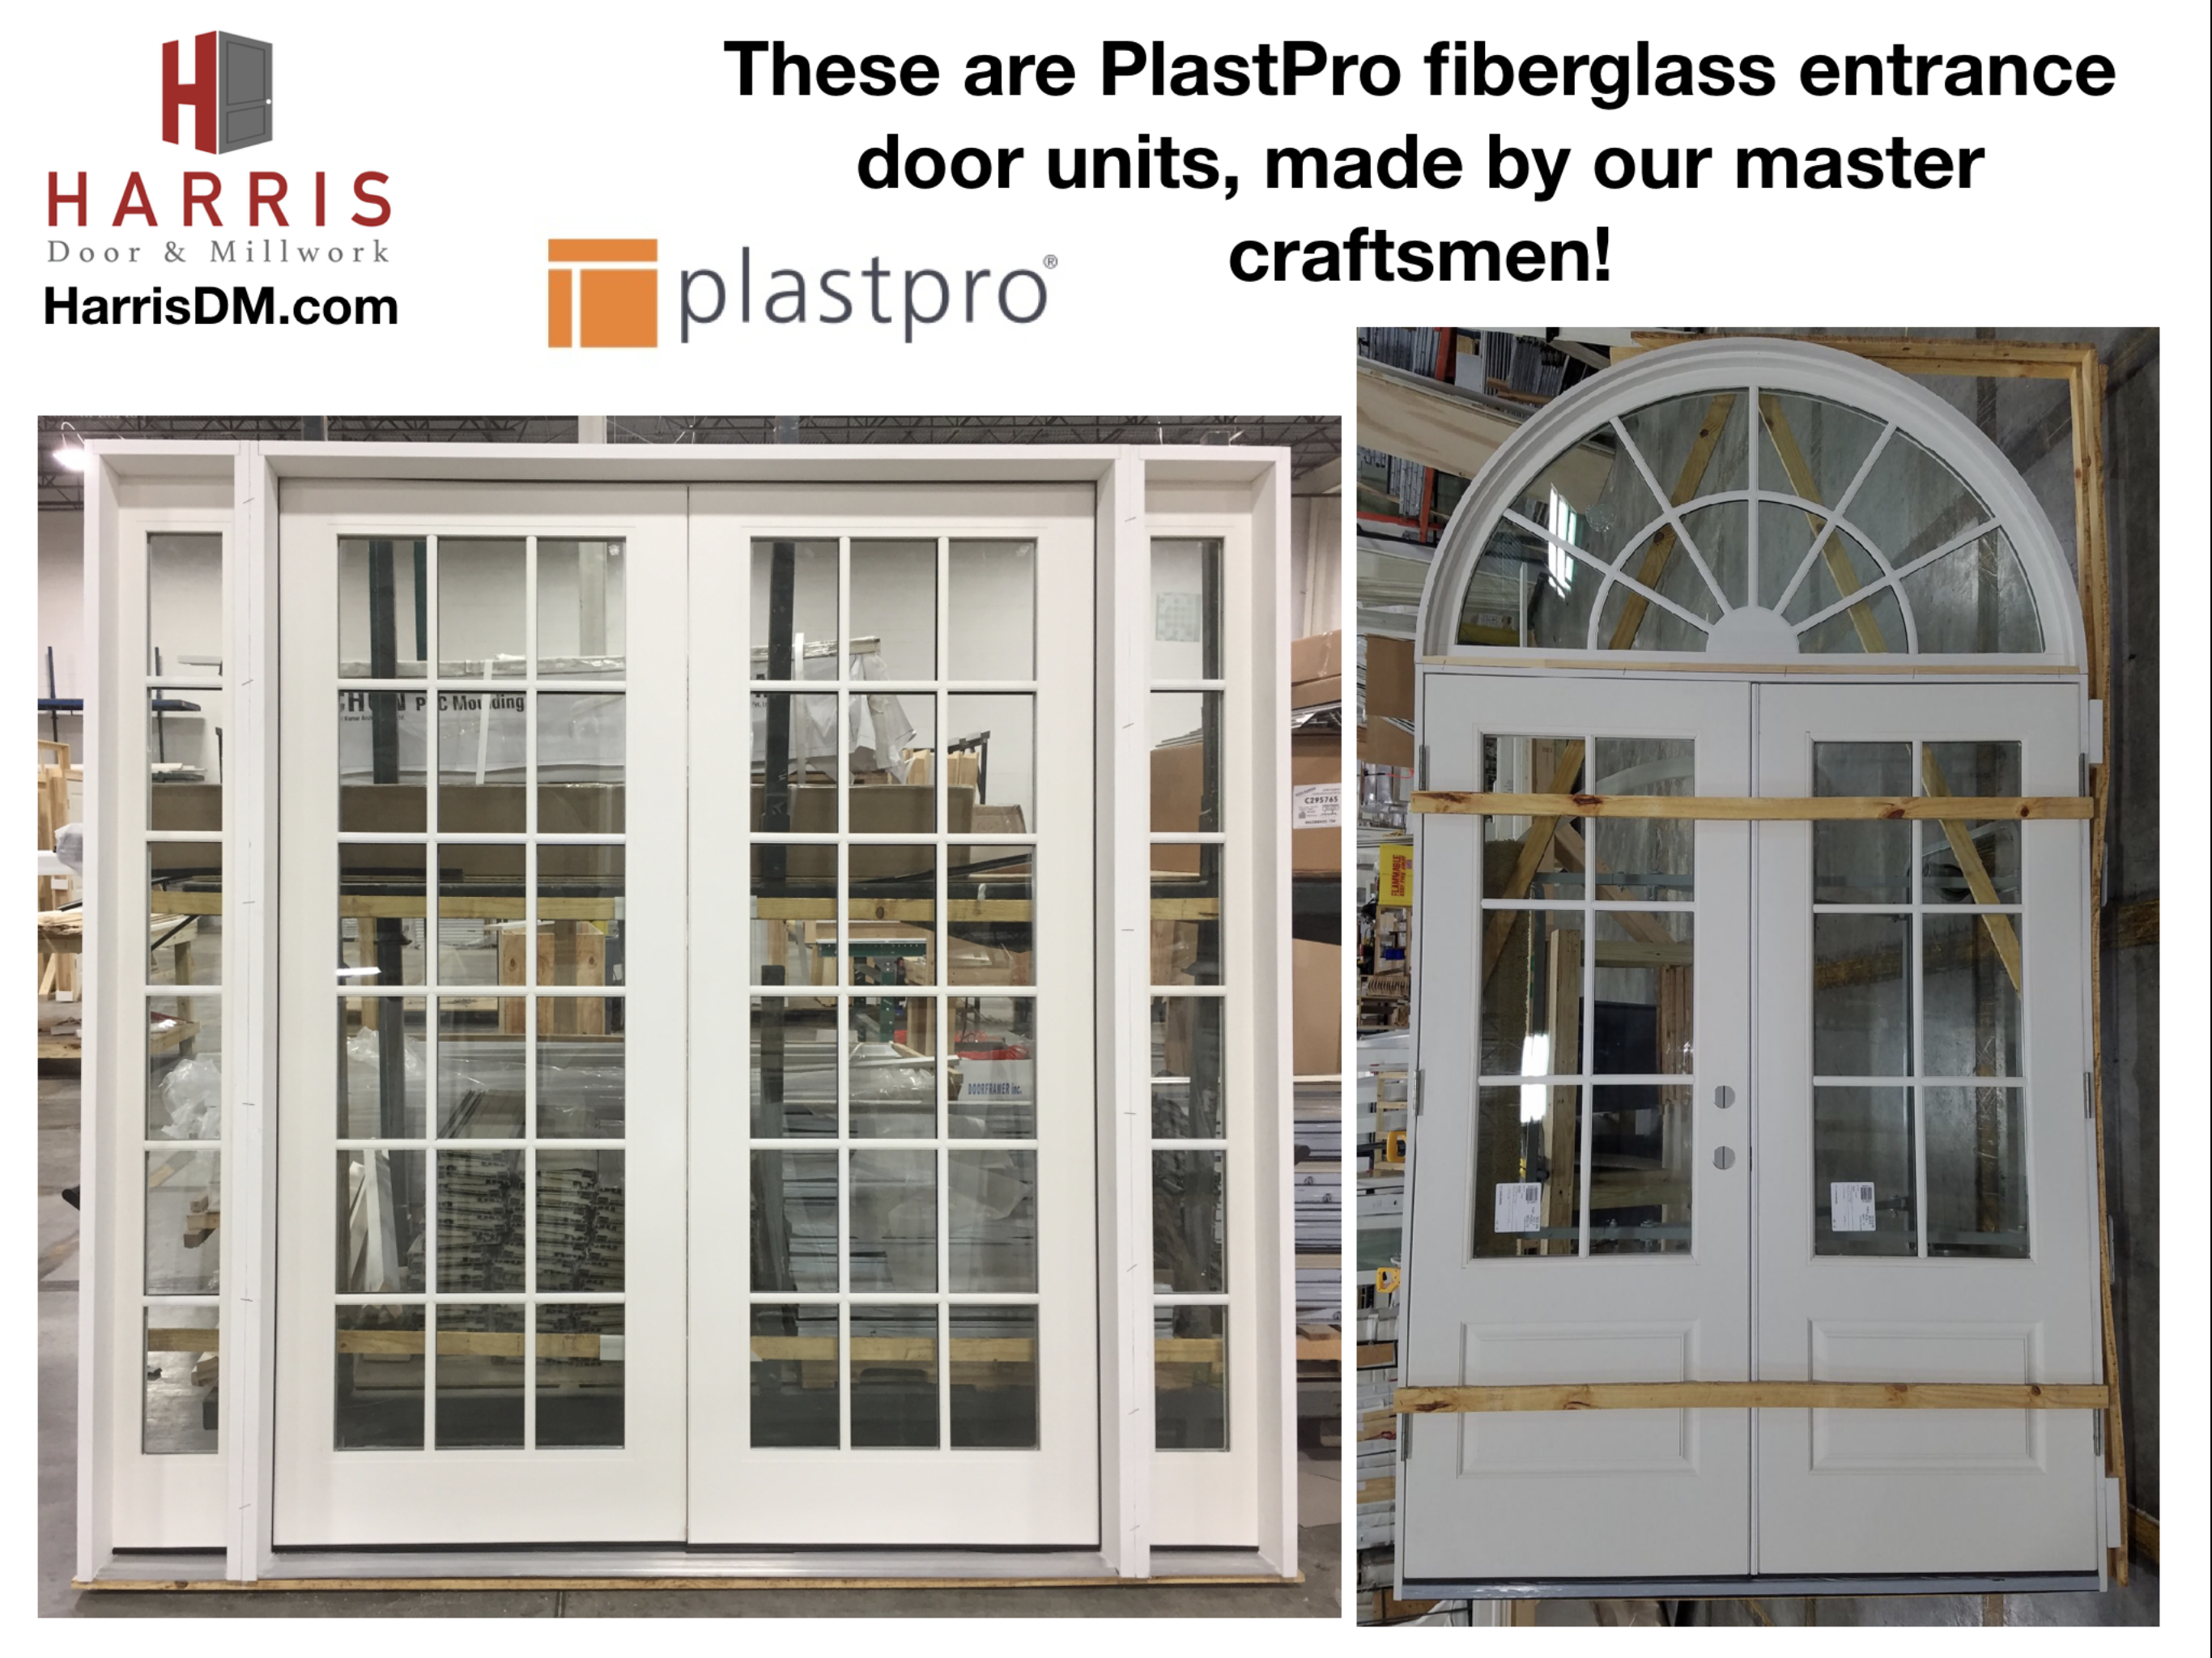 PlastPro Fiberglass Entrance